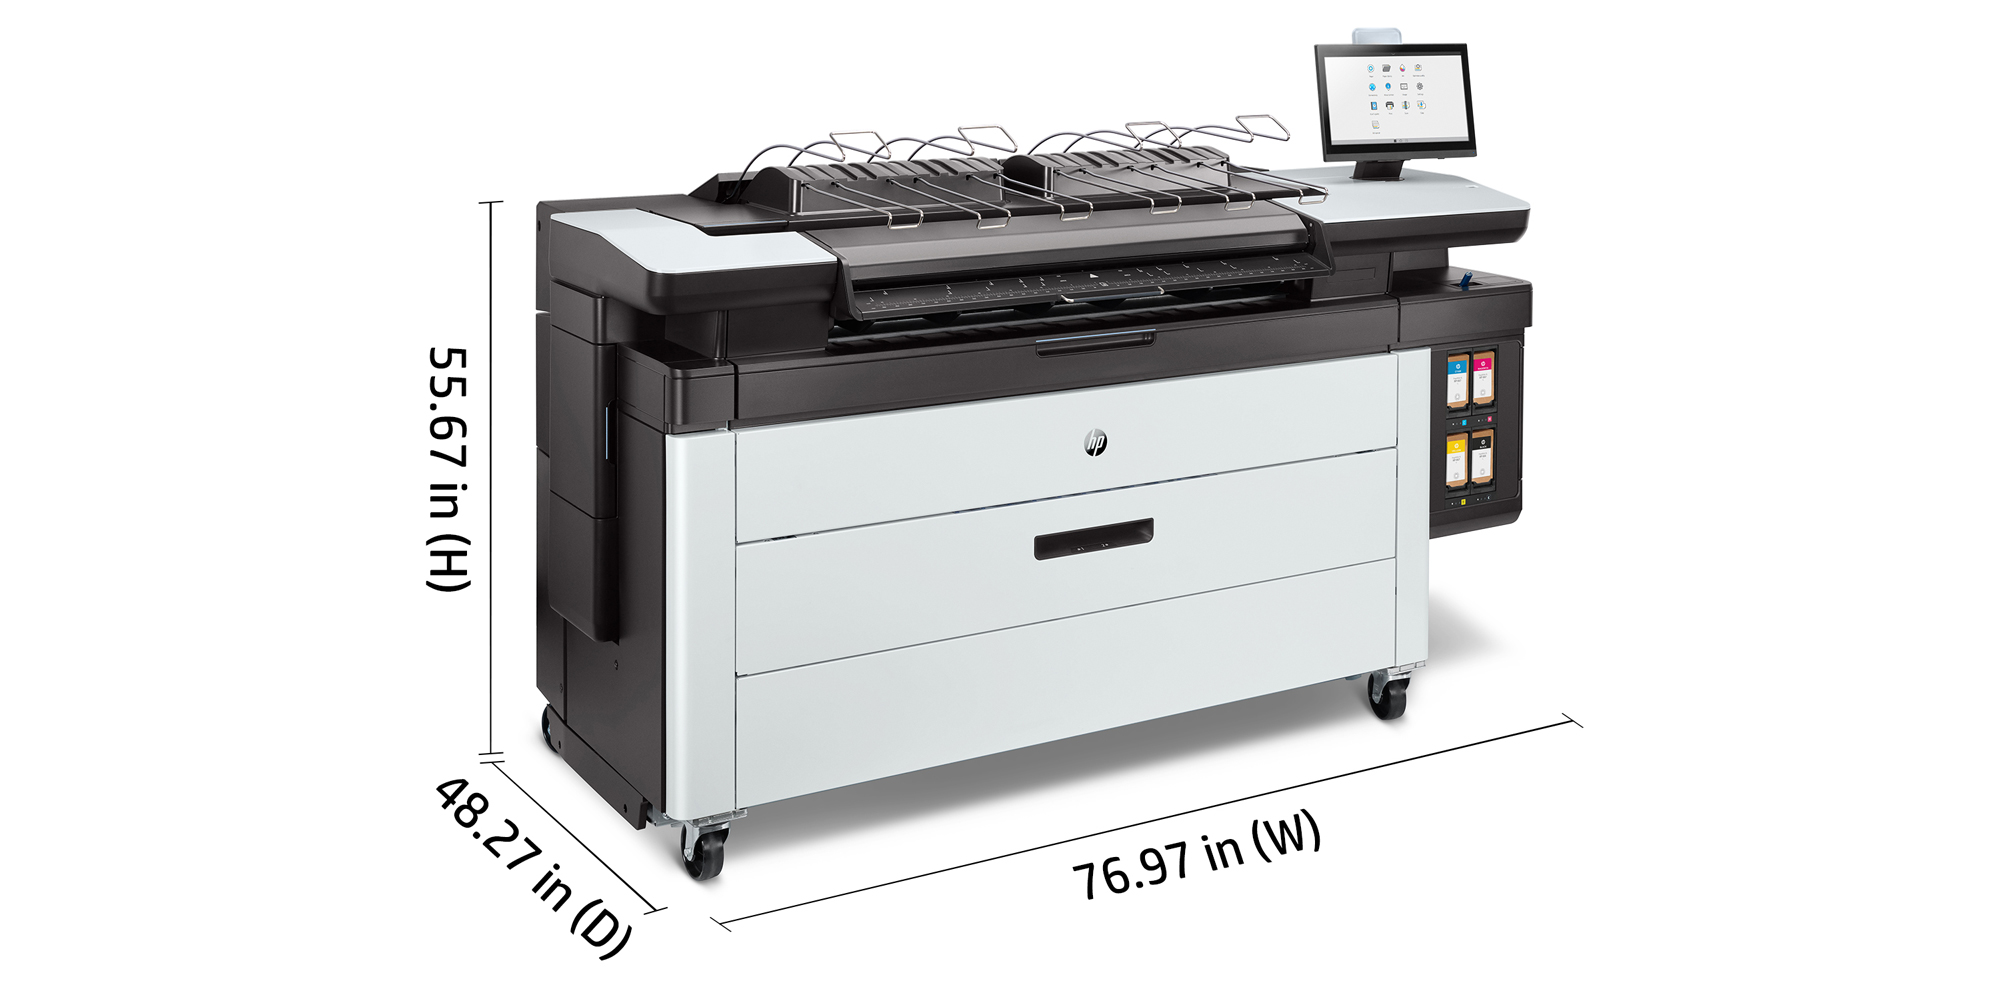 PageWide XL 5200 Printer series